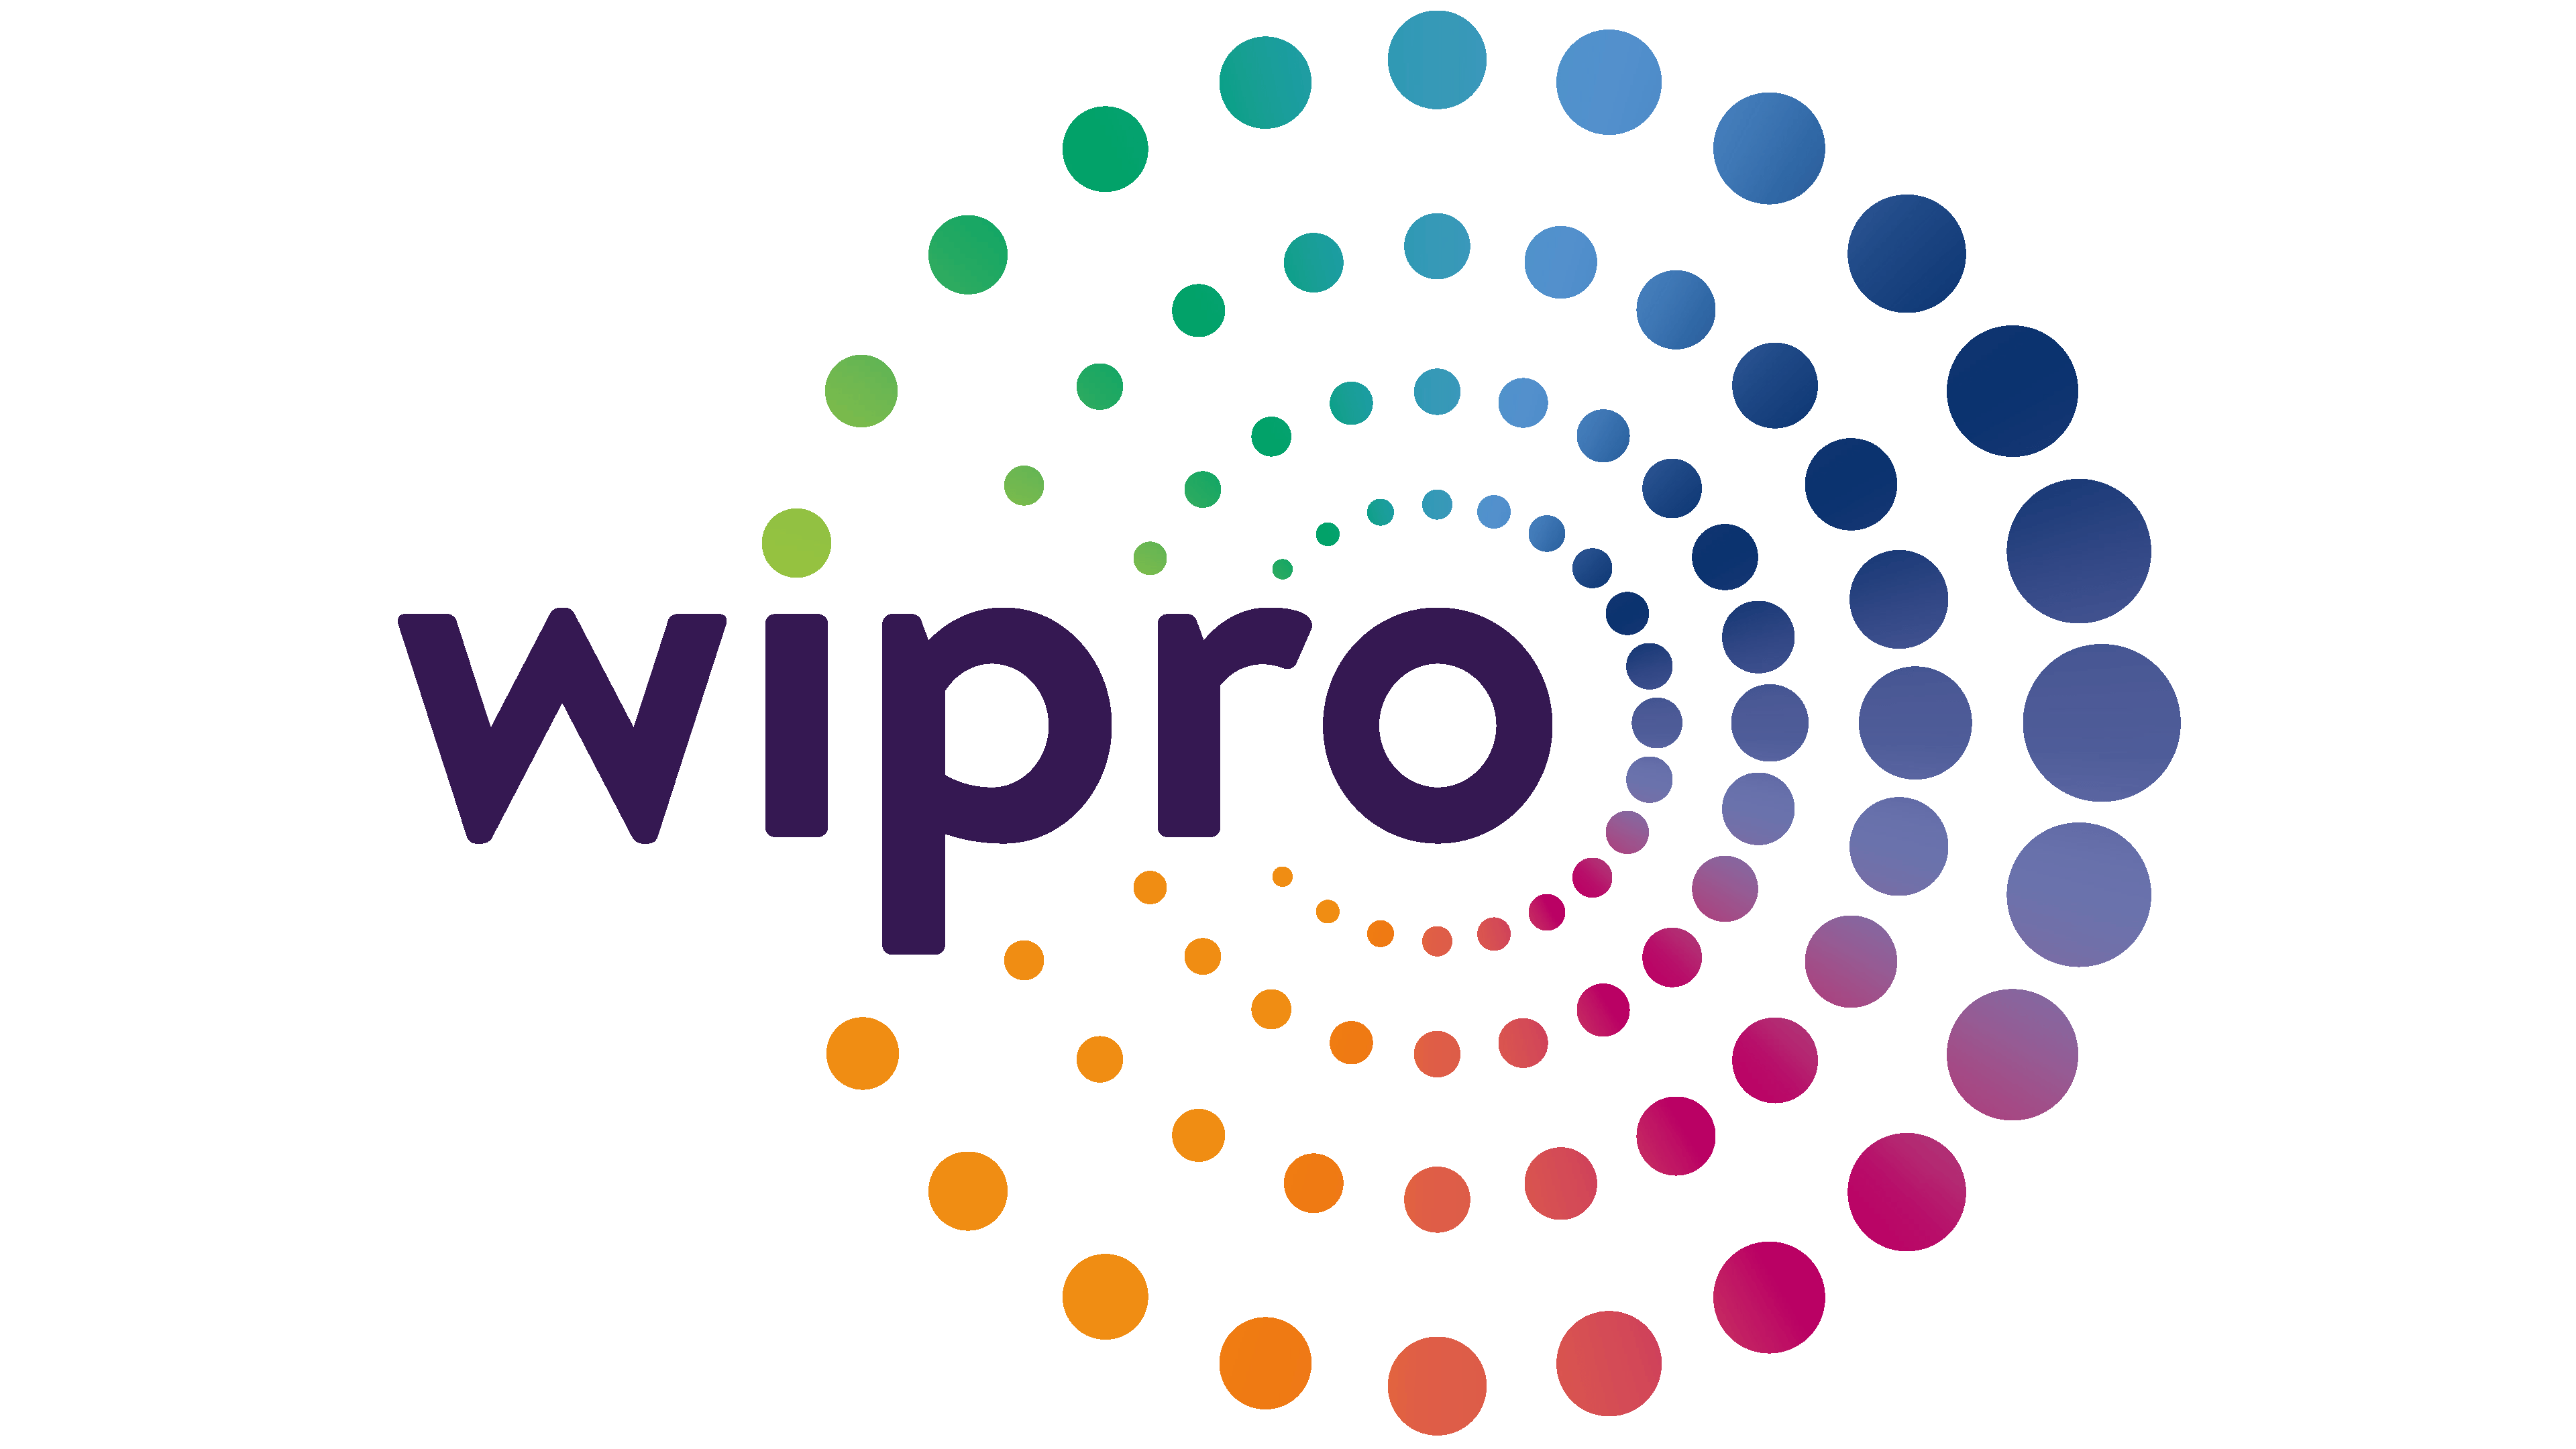   - About Wipro and Newgen Partnership